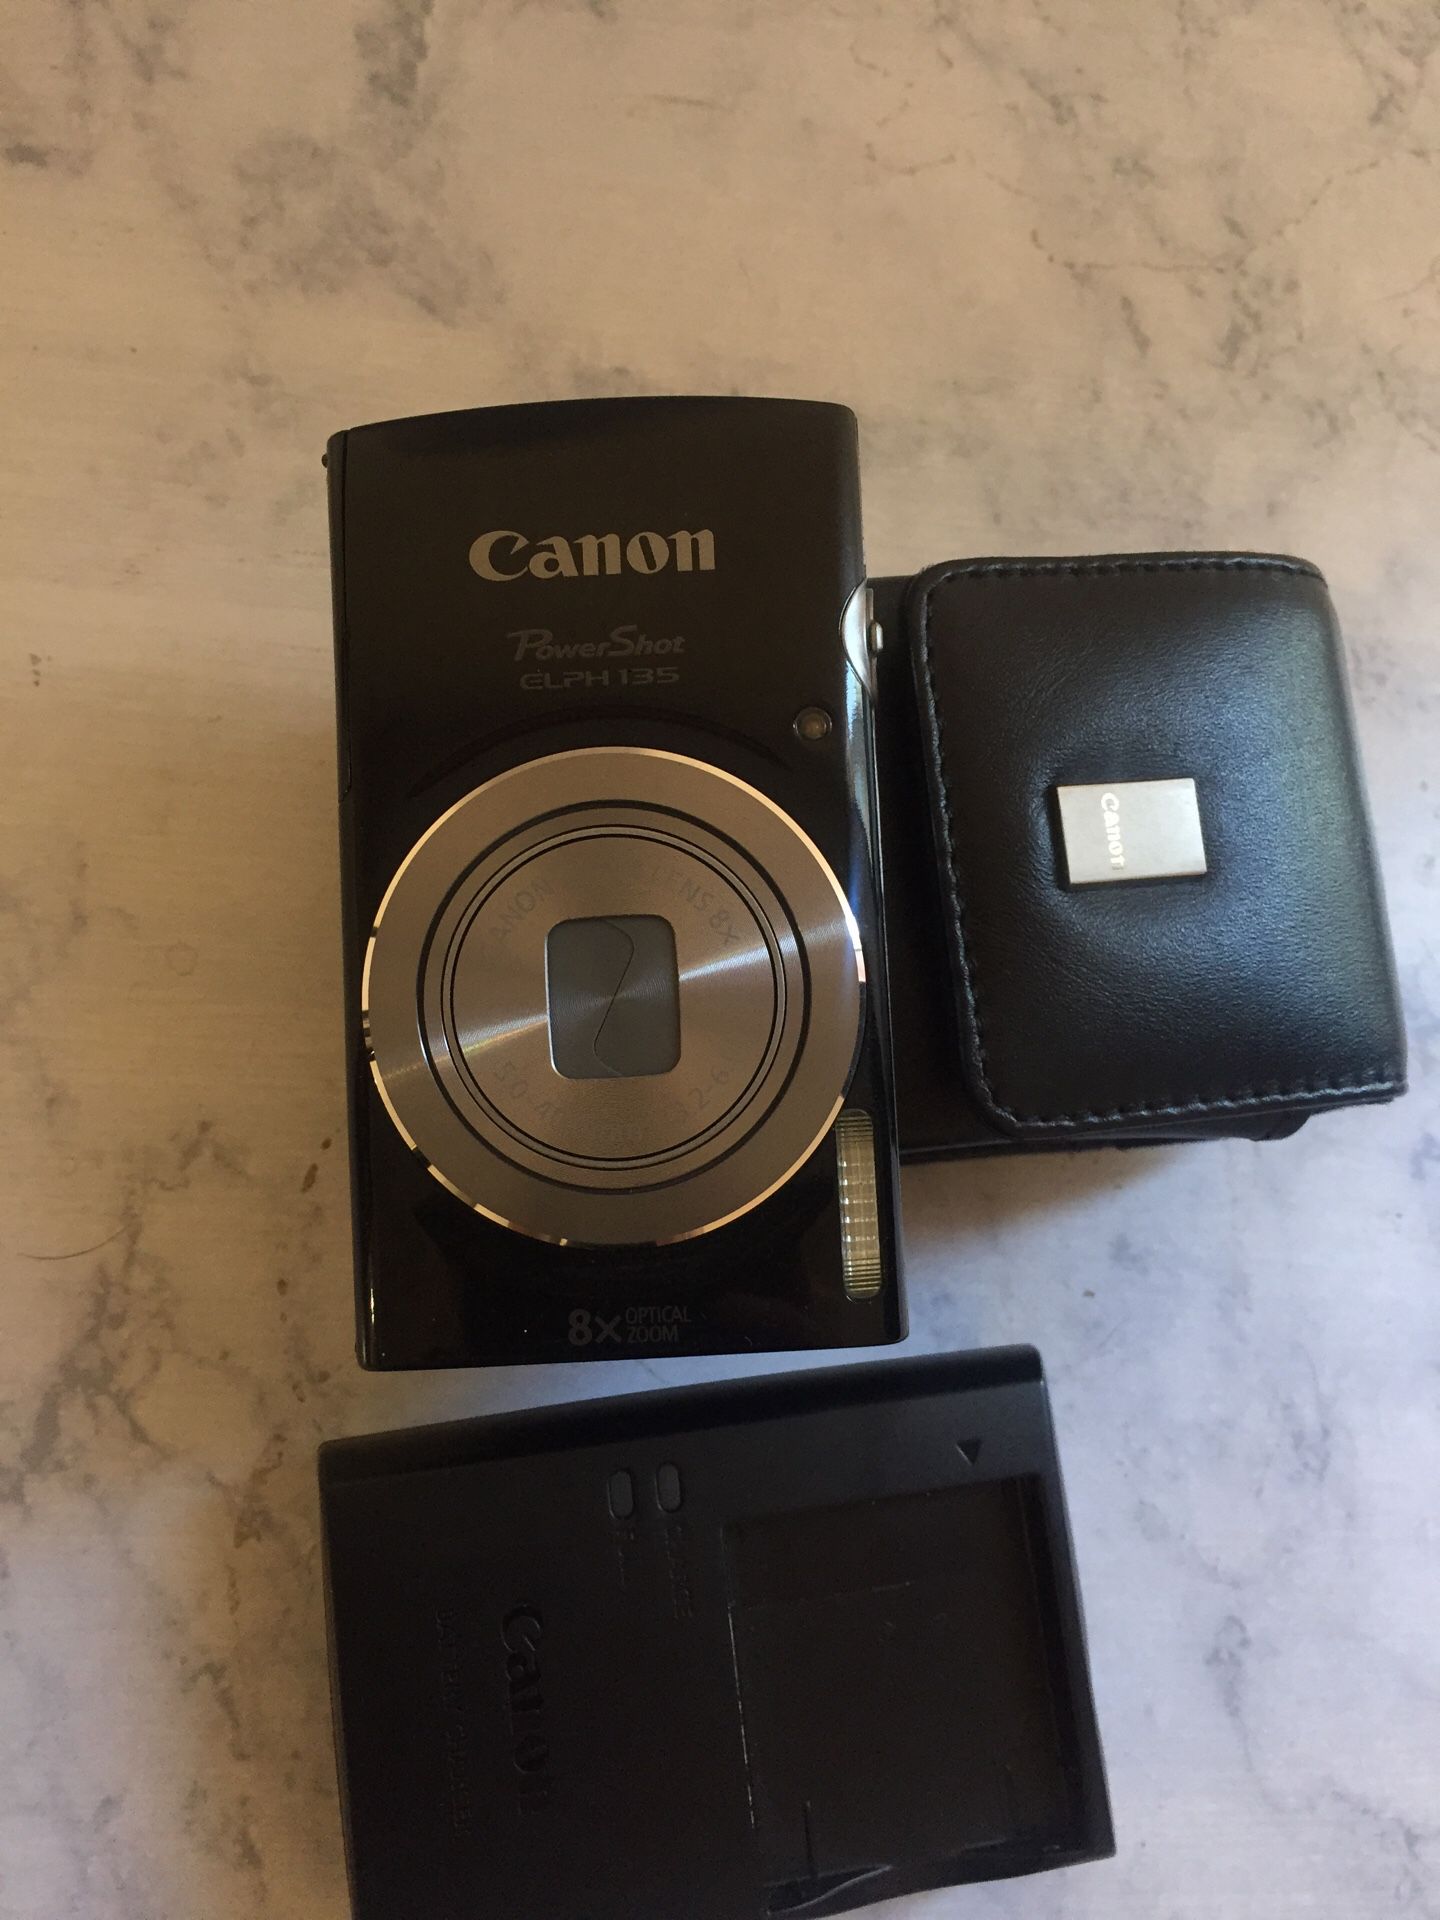 Canon PowerShot Elph135 digital camera